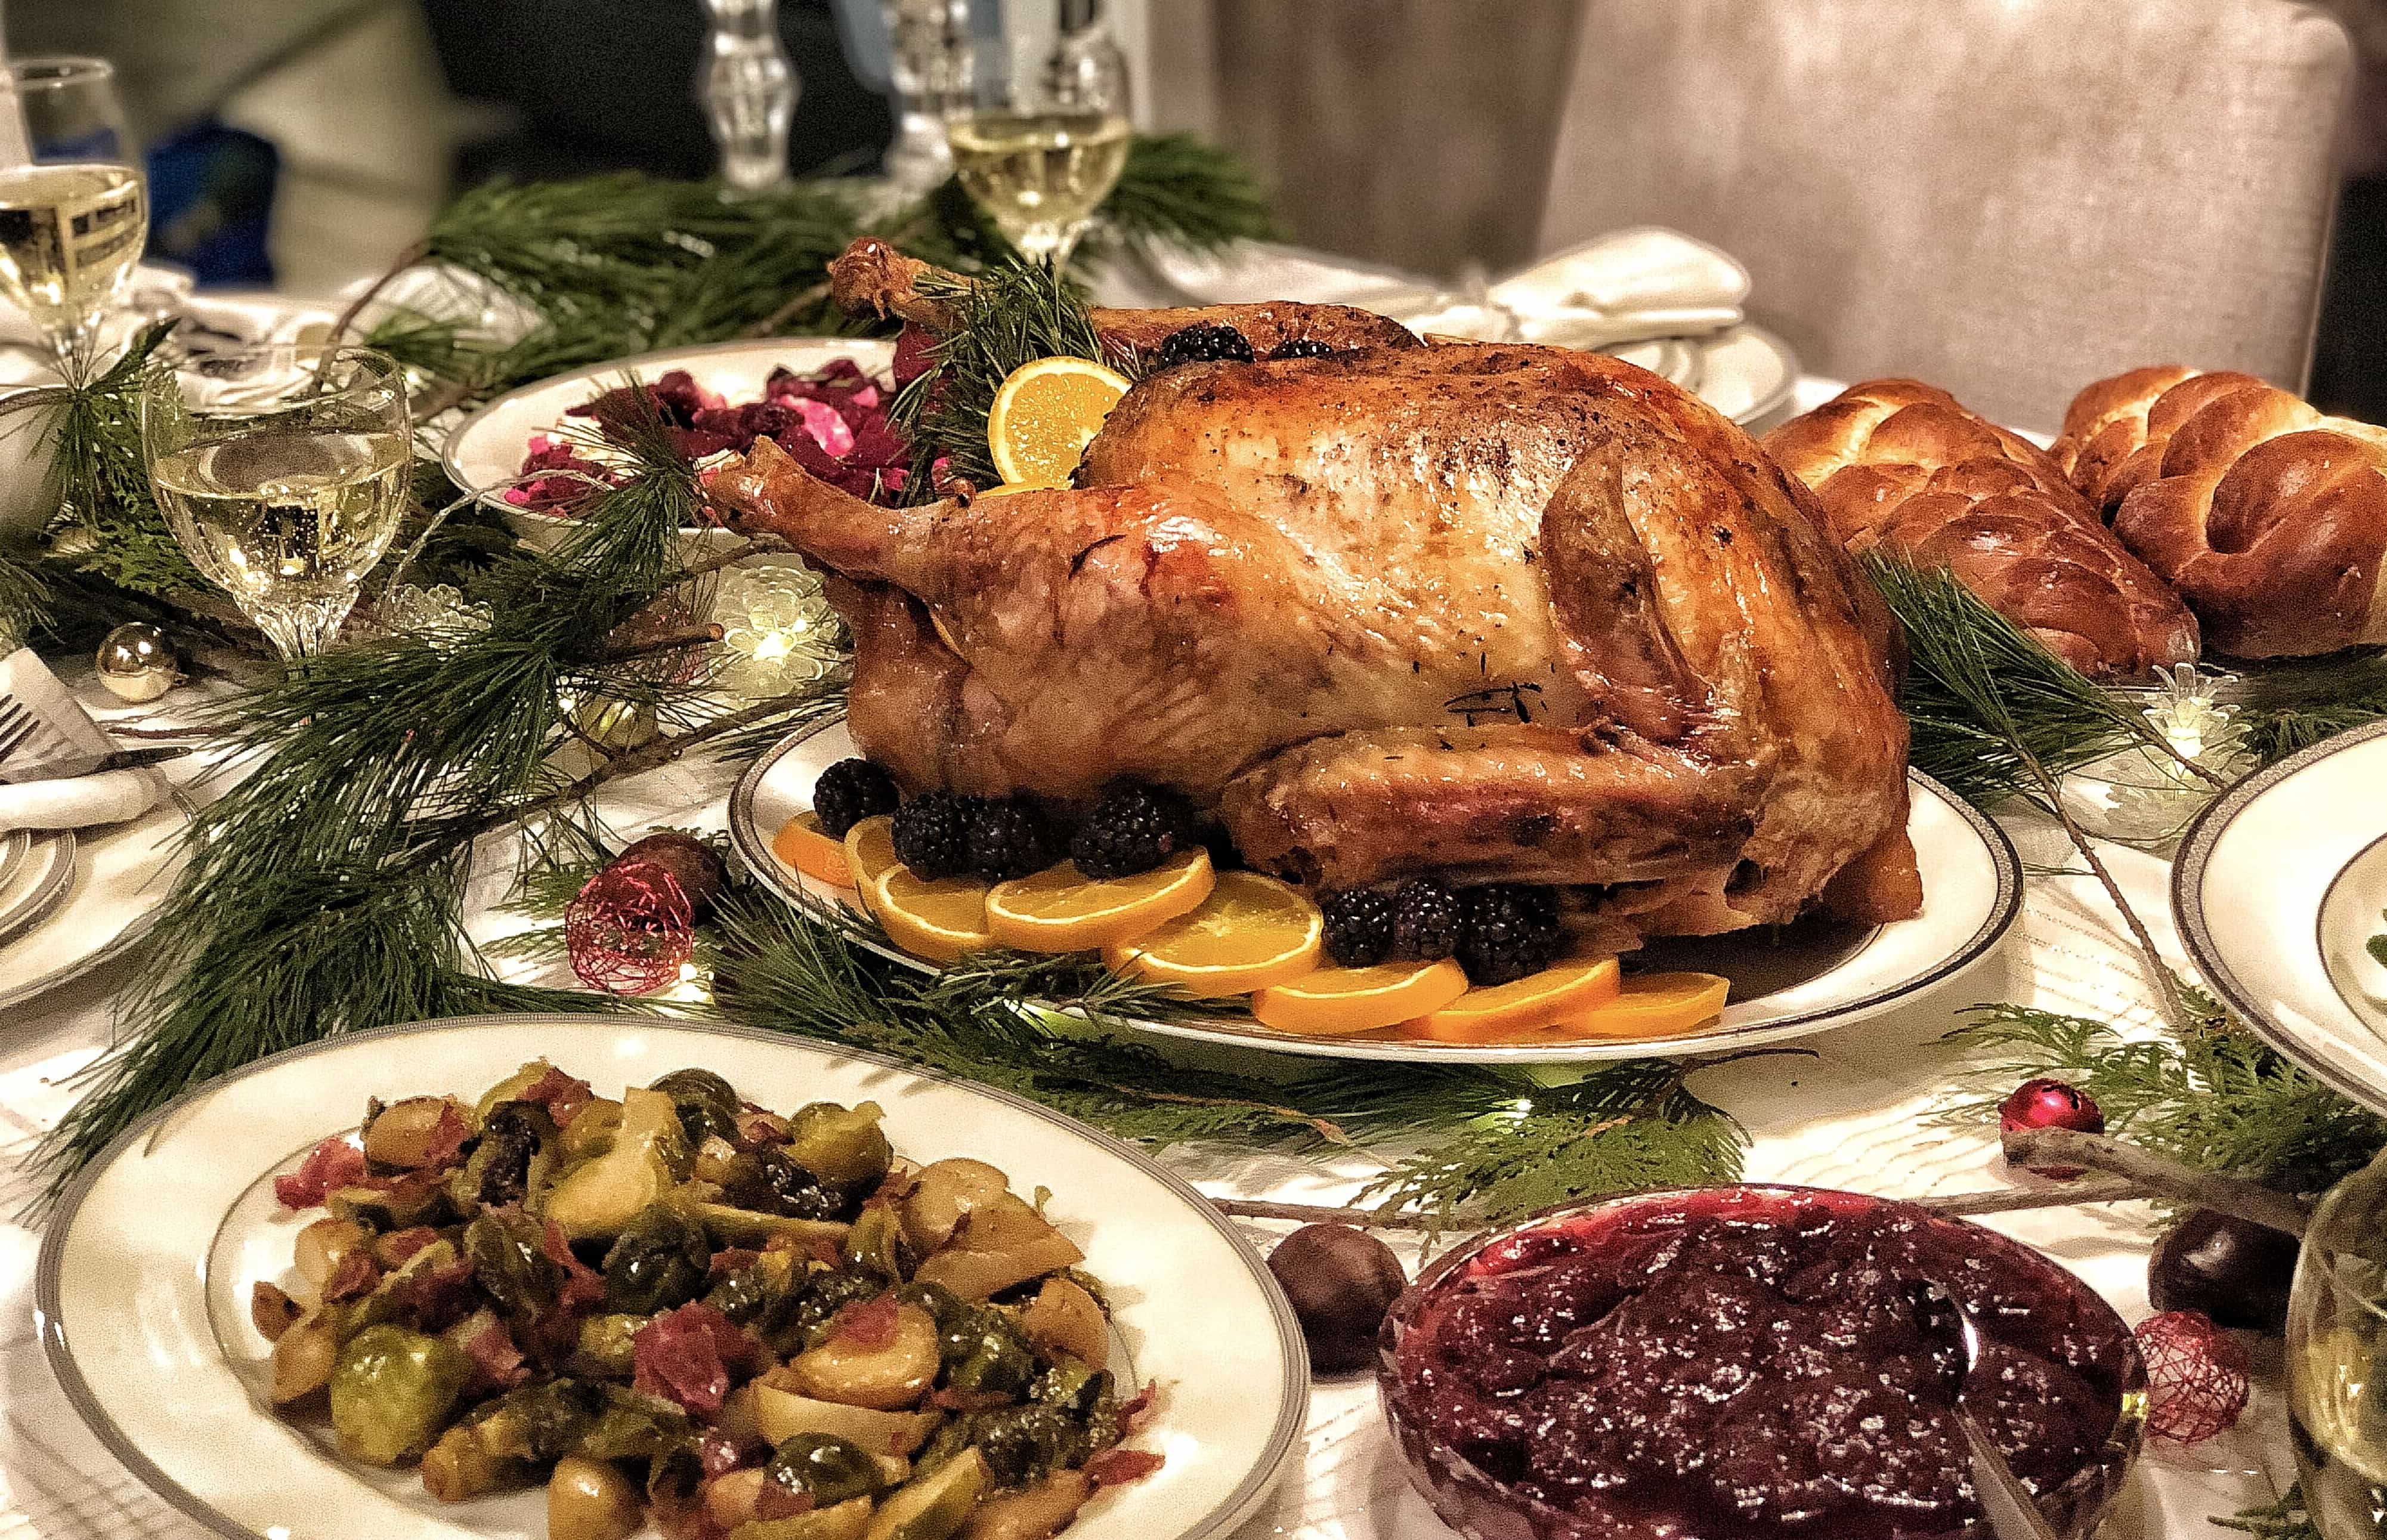 Turkey dinner on the table